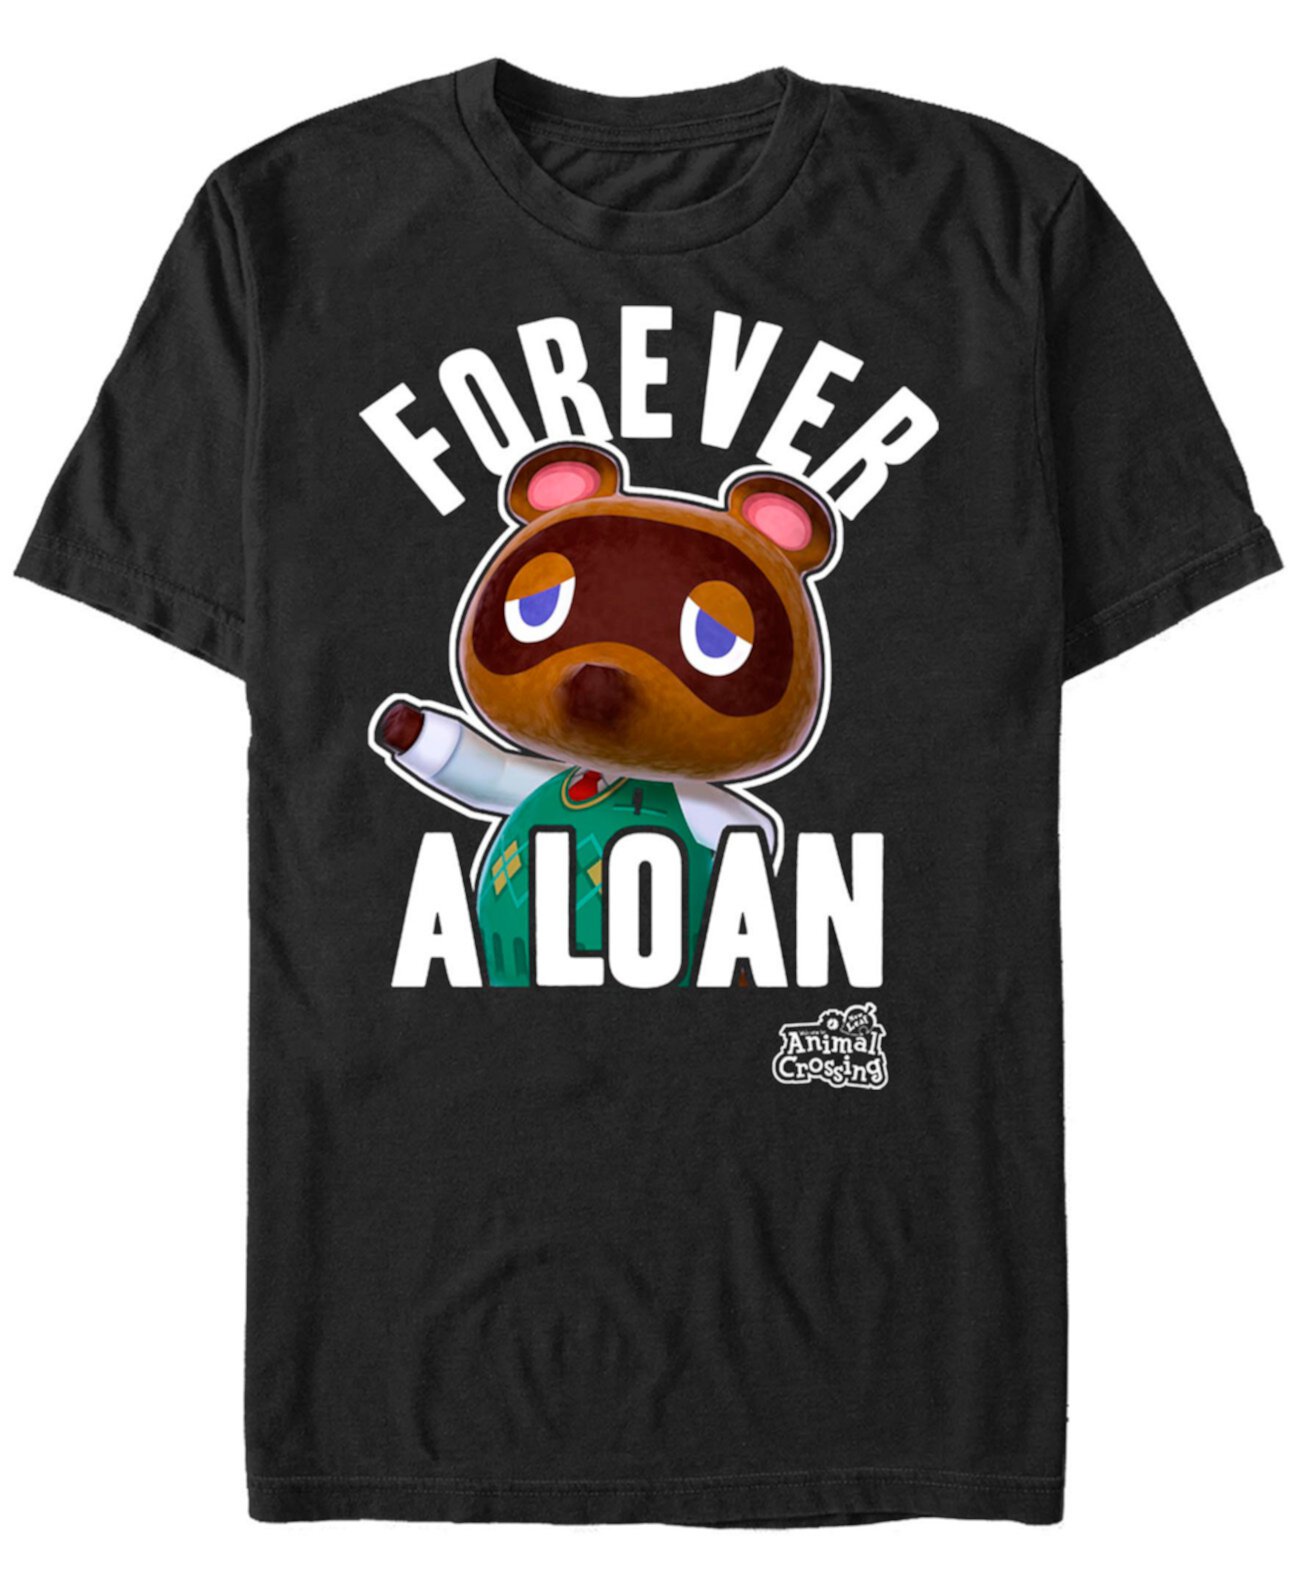 Мужская футболка Nintendo Animal Crossing с короткими рукавами Tom Nook Forever A Loan FIFTH SUN